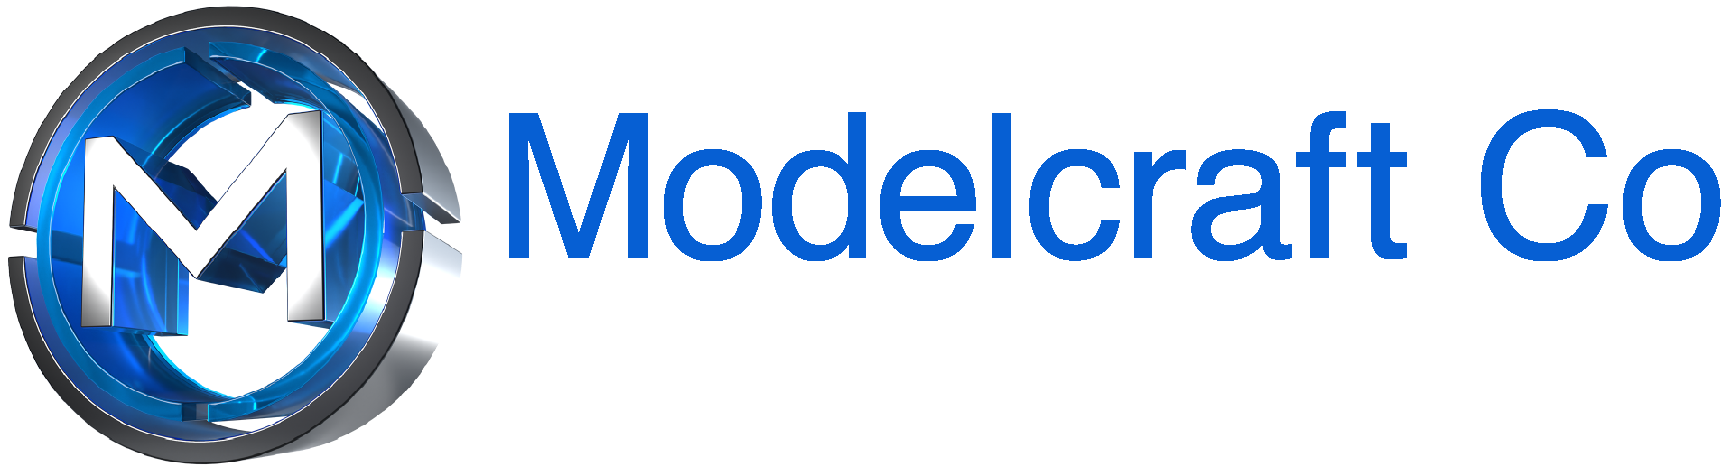 Modelcraft Co logo